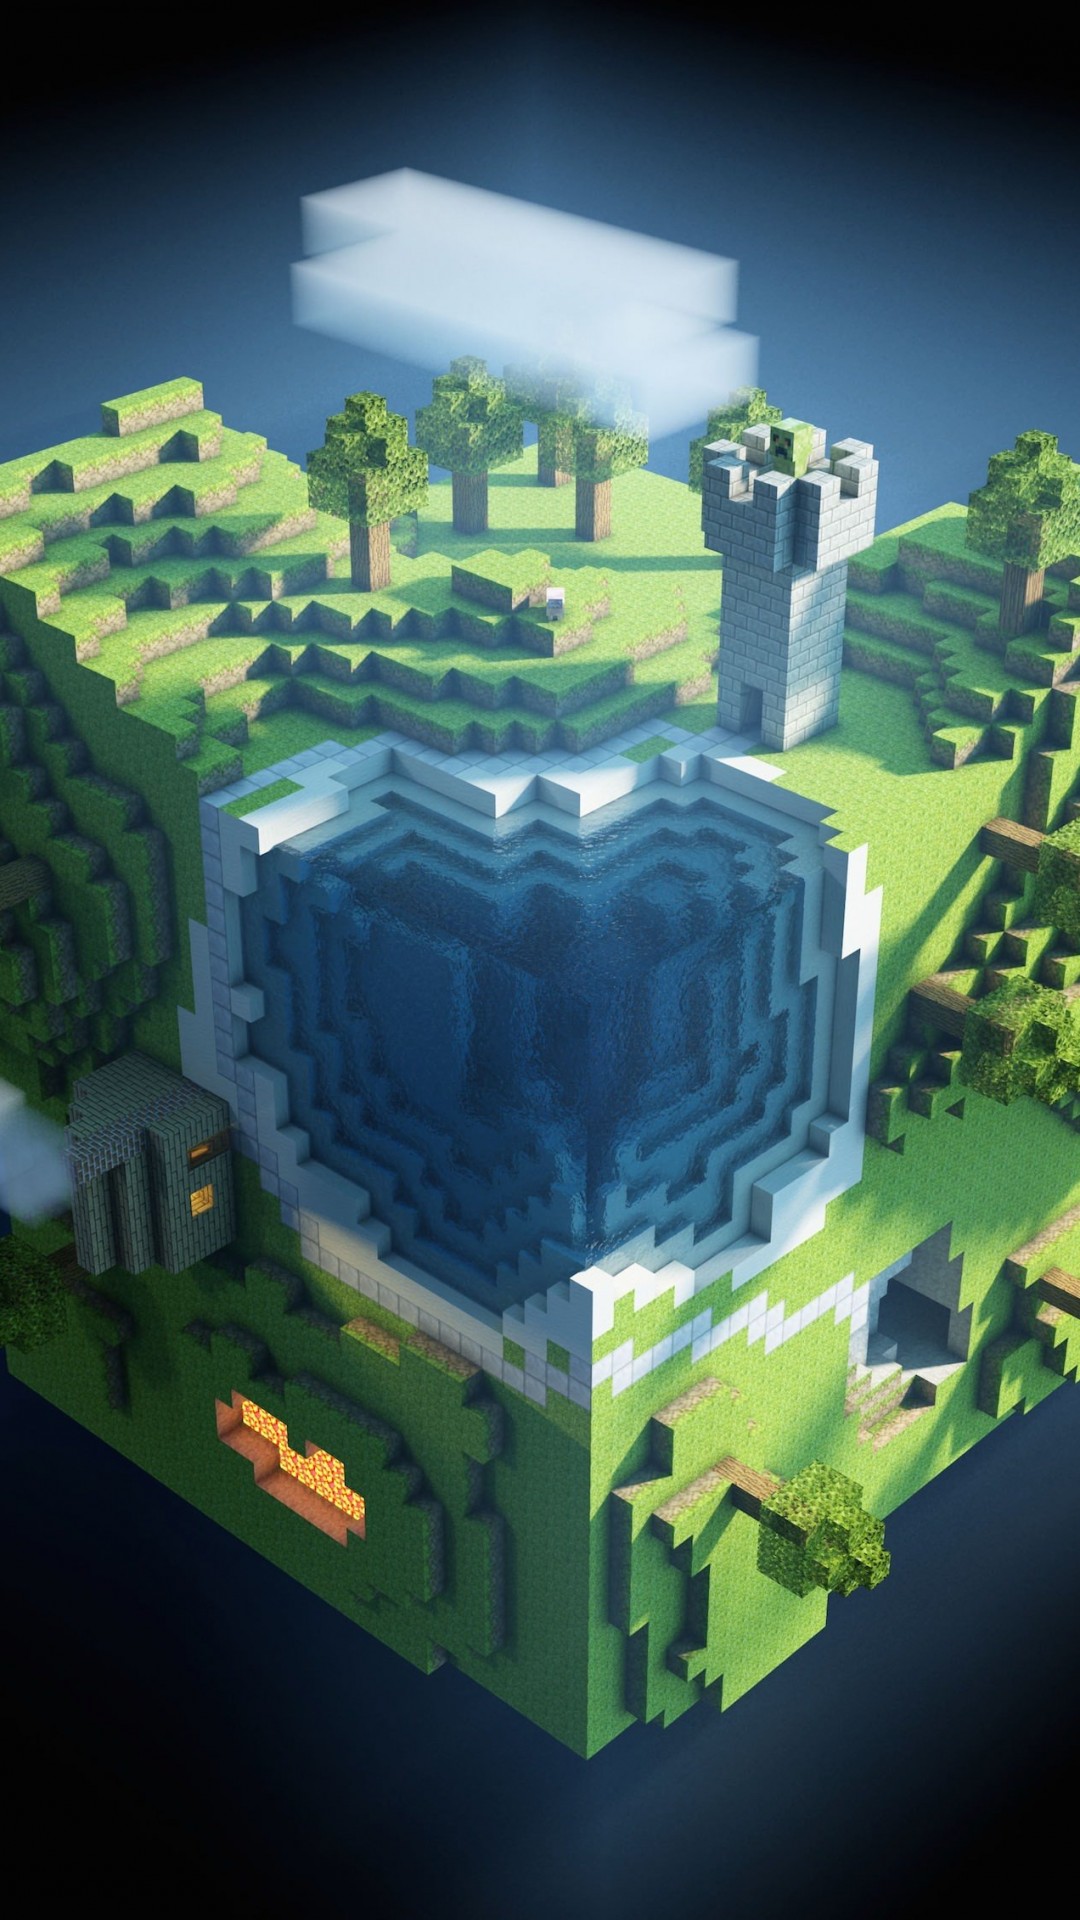 Planet Minecraft Wallpaper for Google Nexus 5